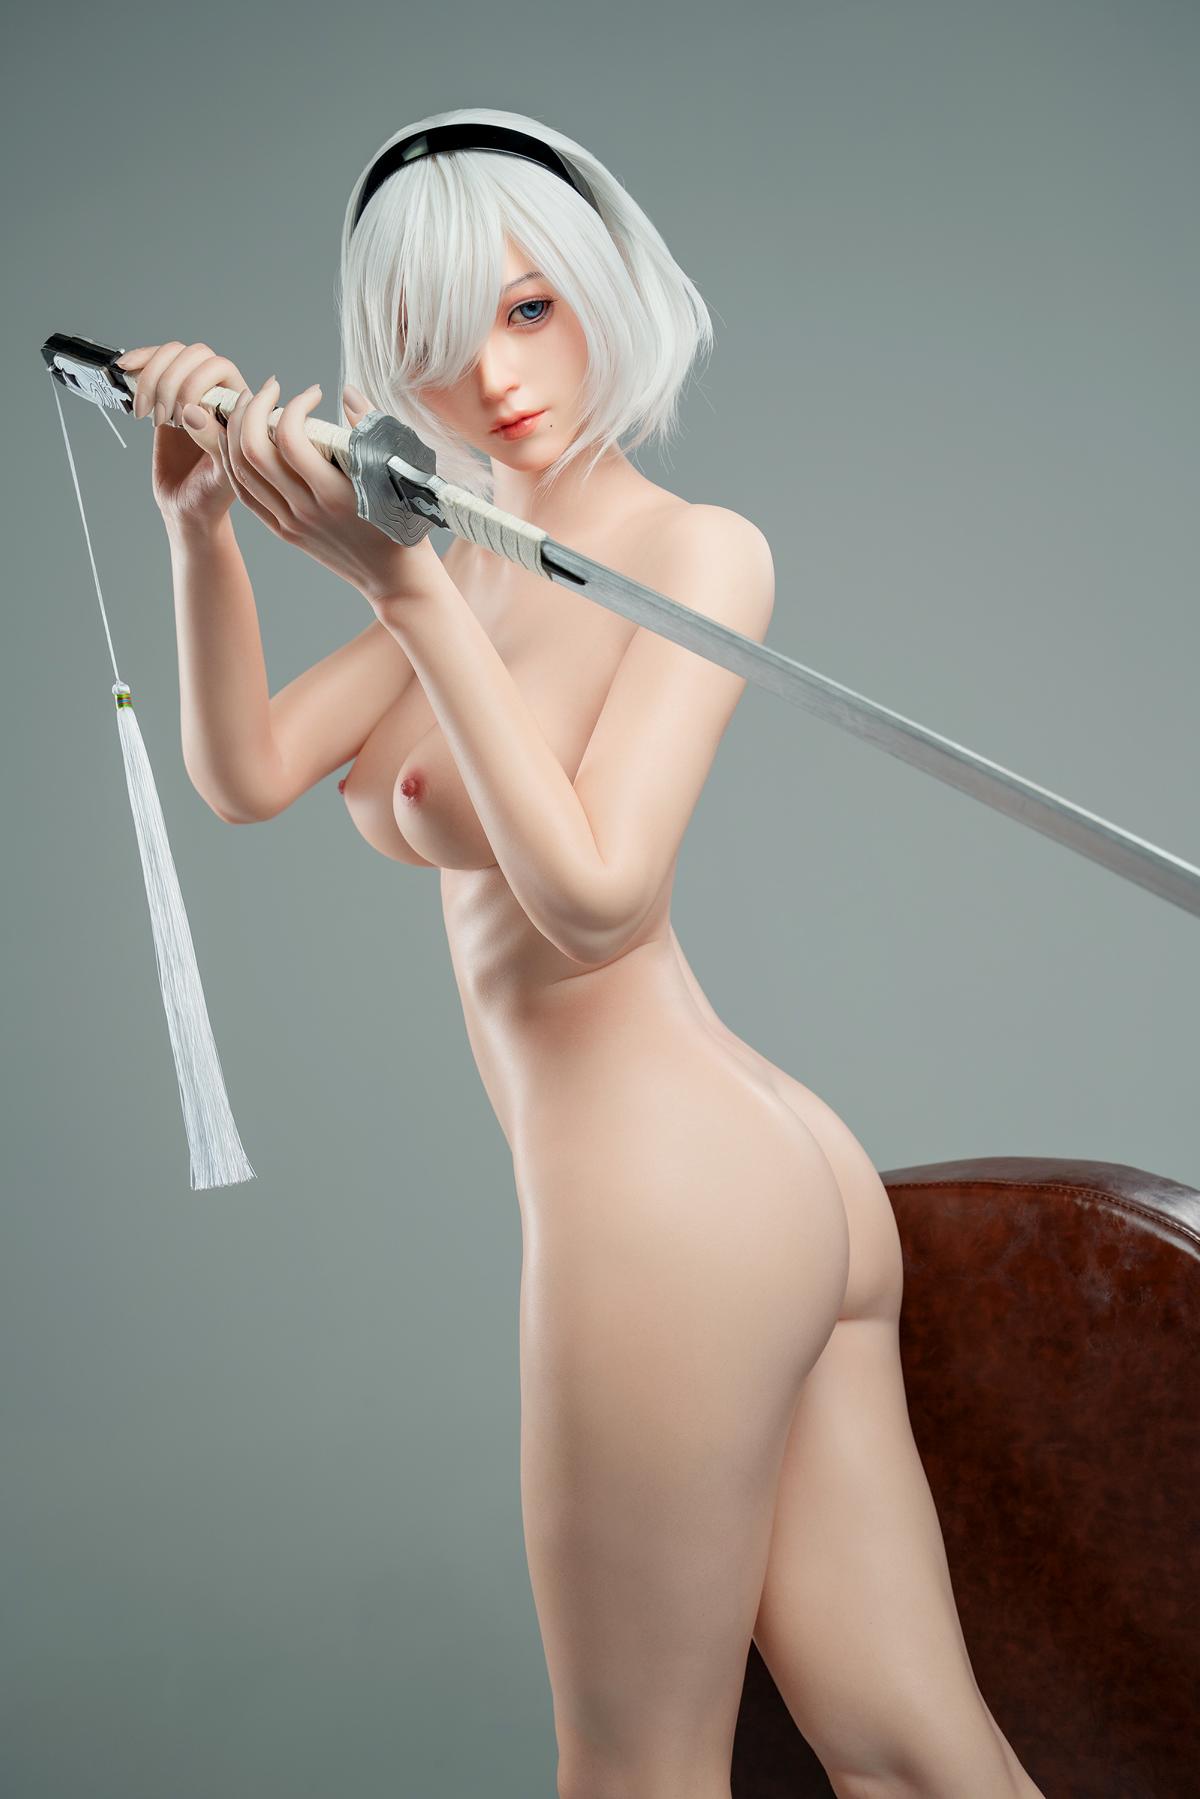 Anime Yorha Ultra Silicone Sex Doll